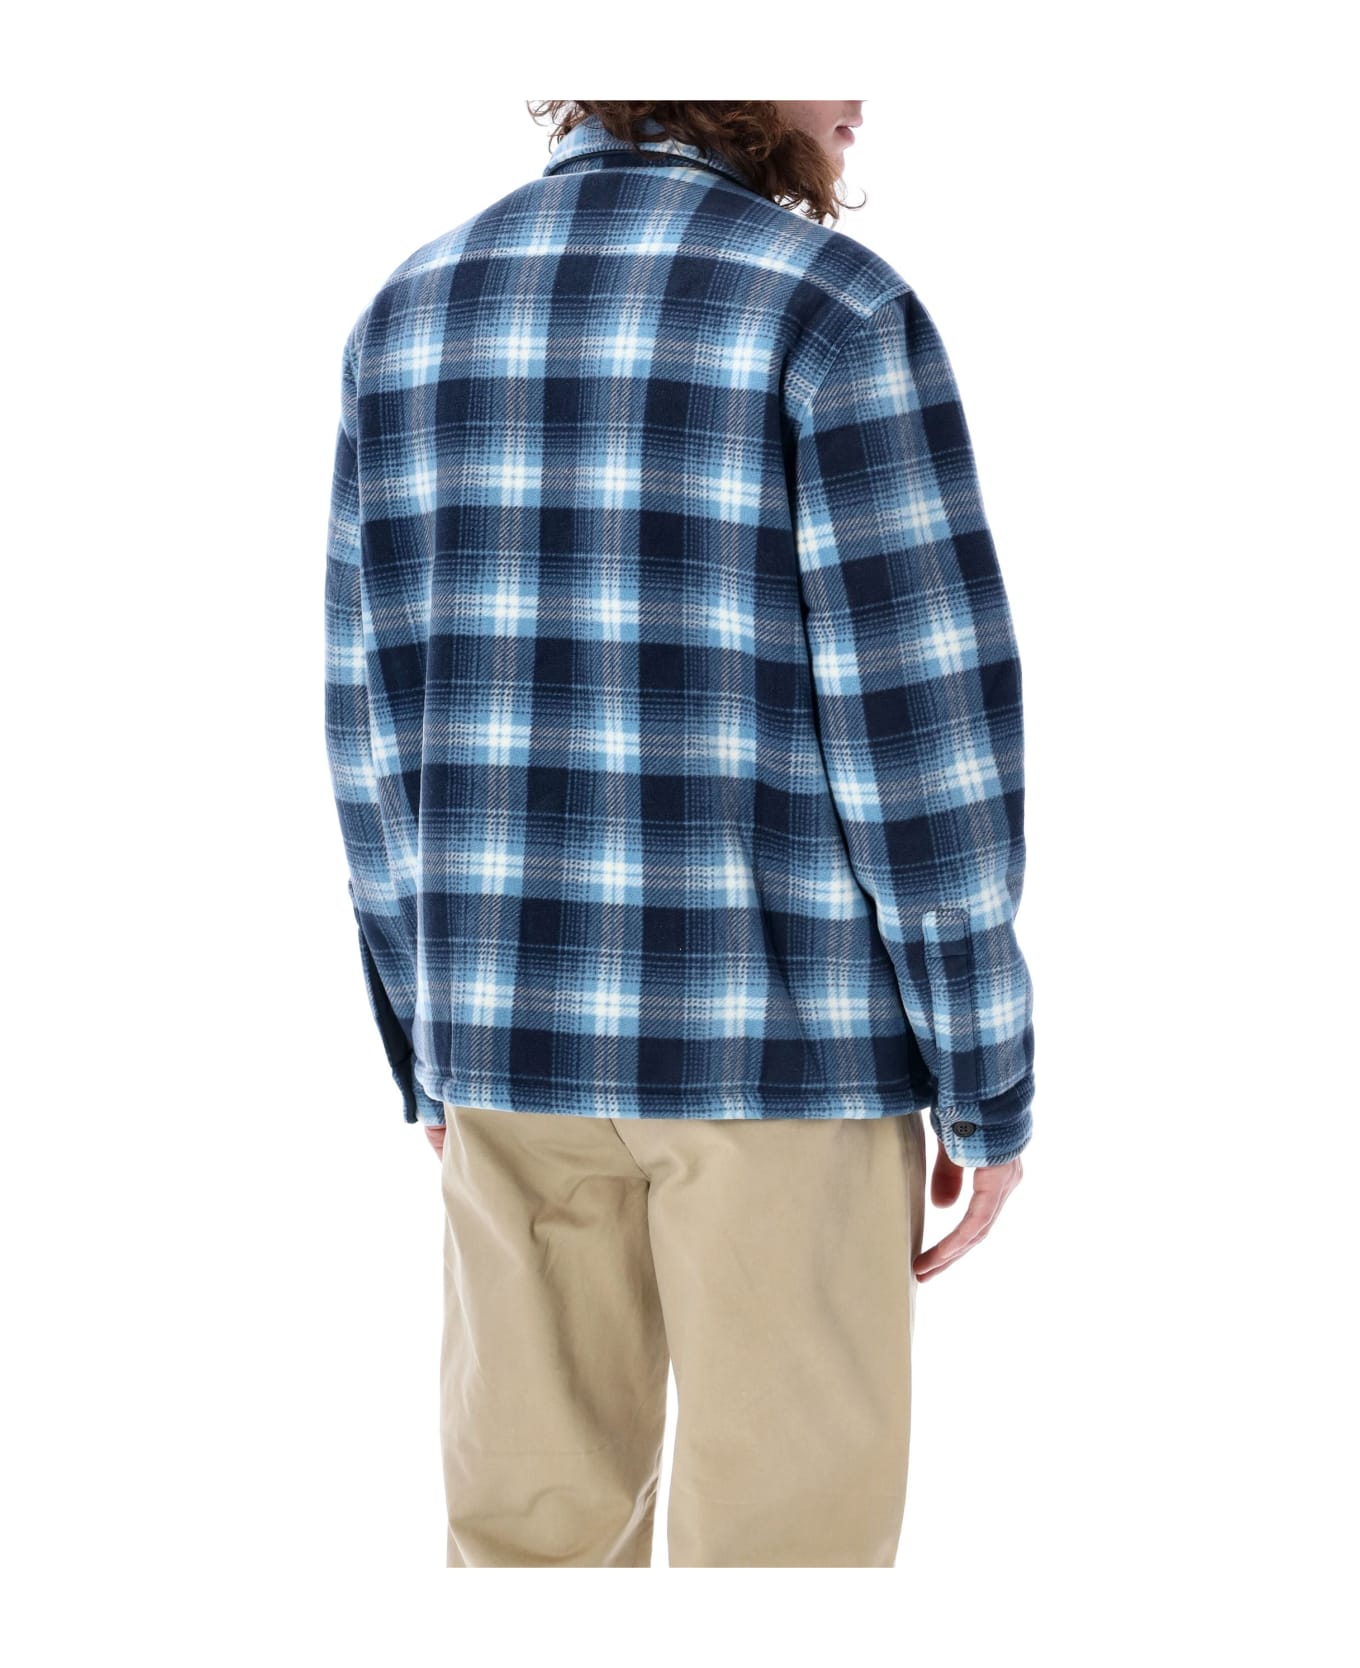 Polo Ralph Lauren Check Shirt Jacket - BLUE CHECK